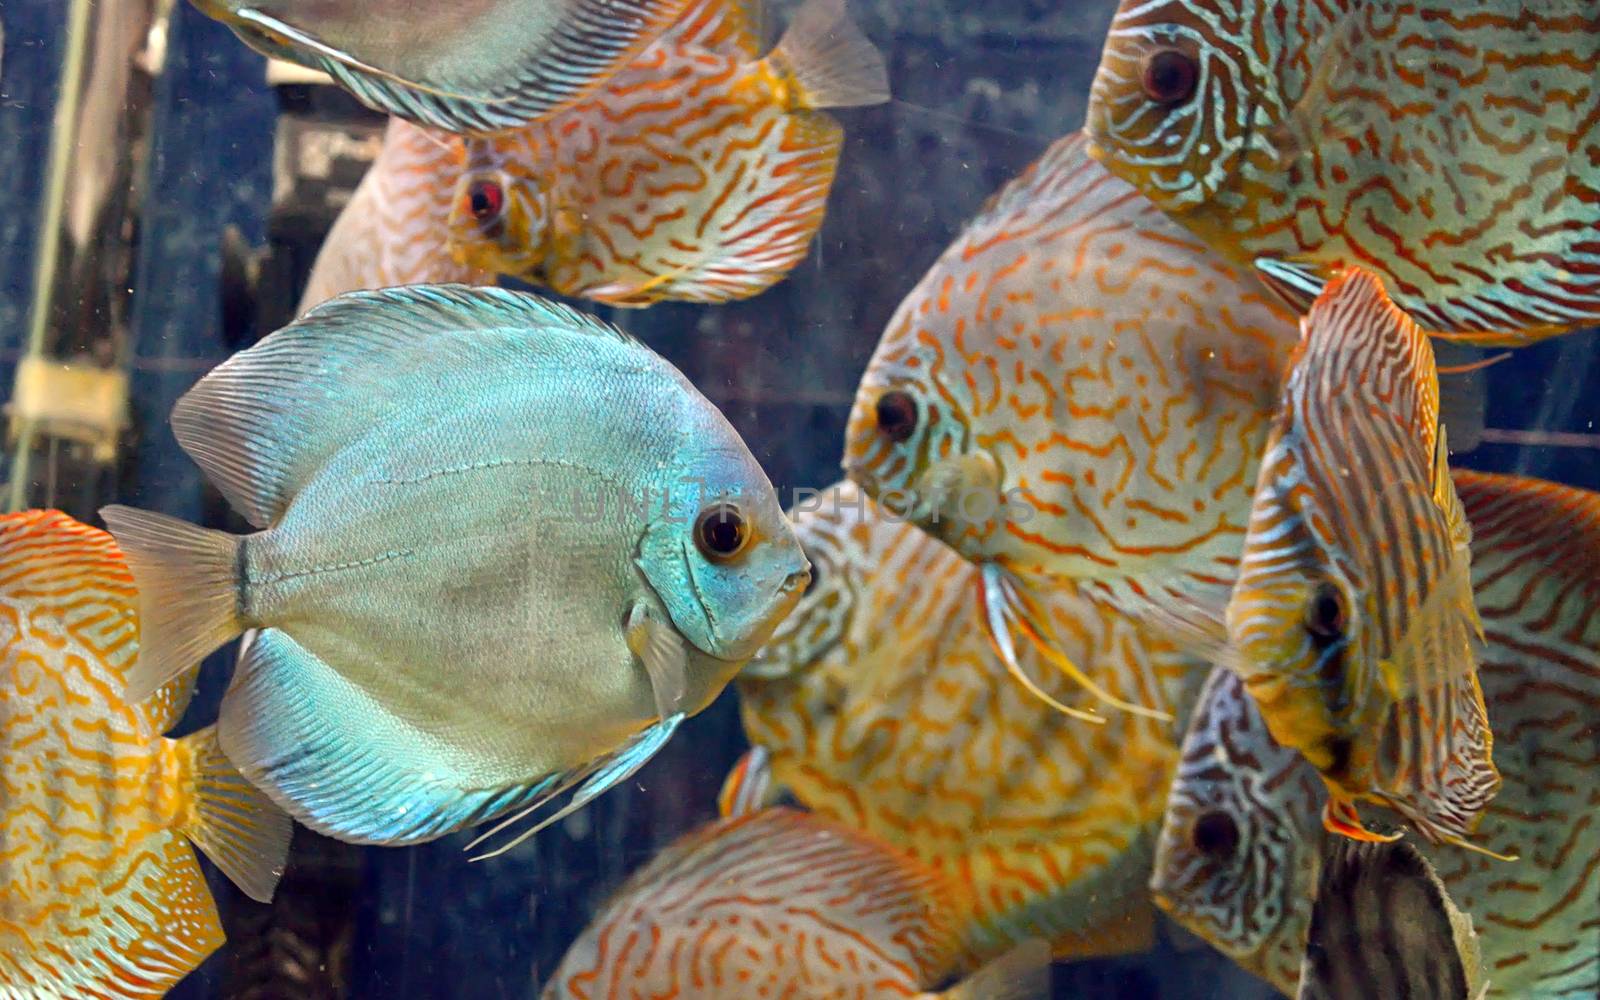 Symphysodon discus fish in an aquarium